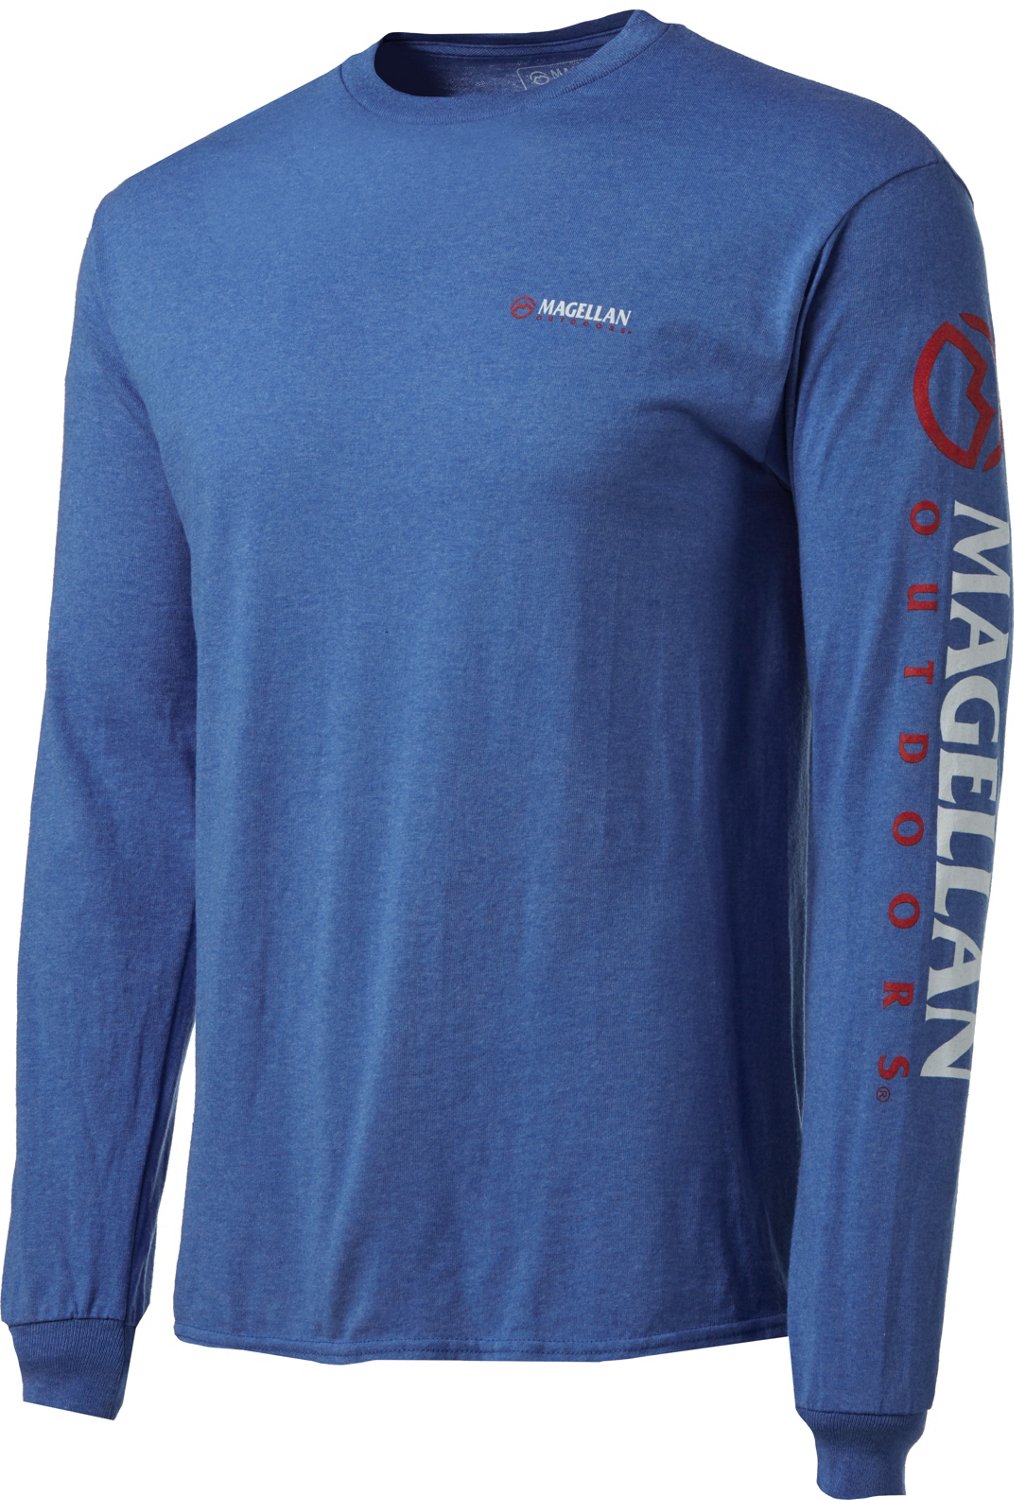 Magellan Outdoors Men's Grotto Falls Long-Sleeve Graphic T-shirt | Academy